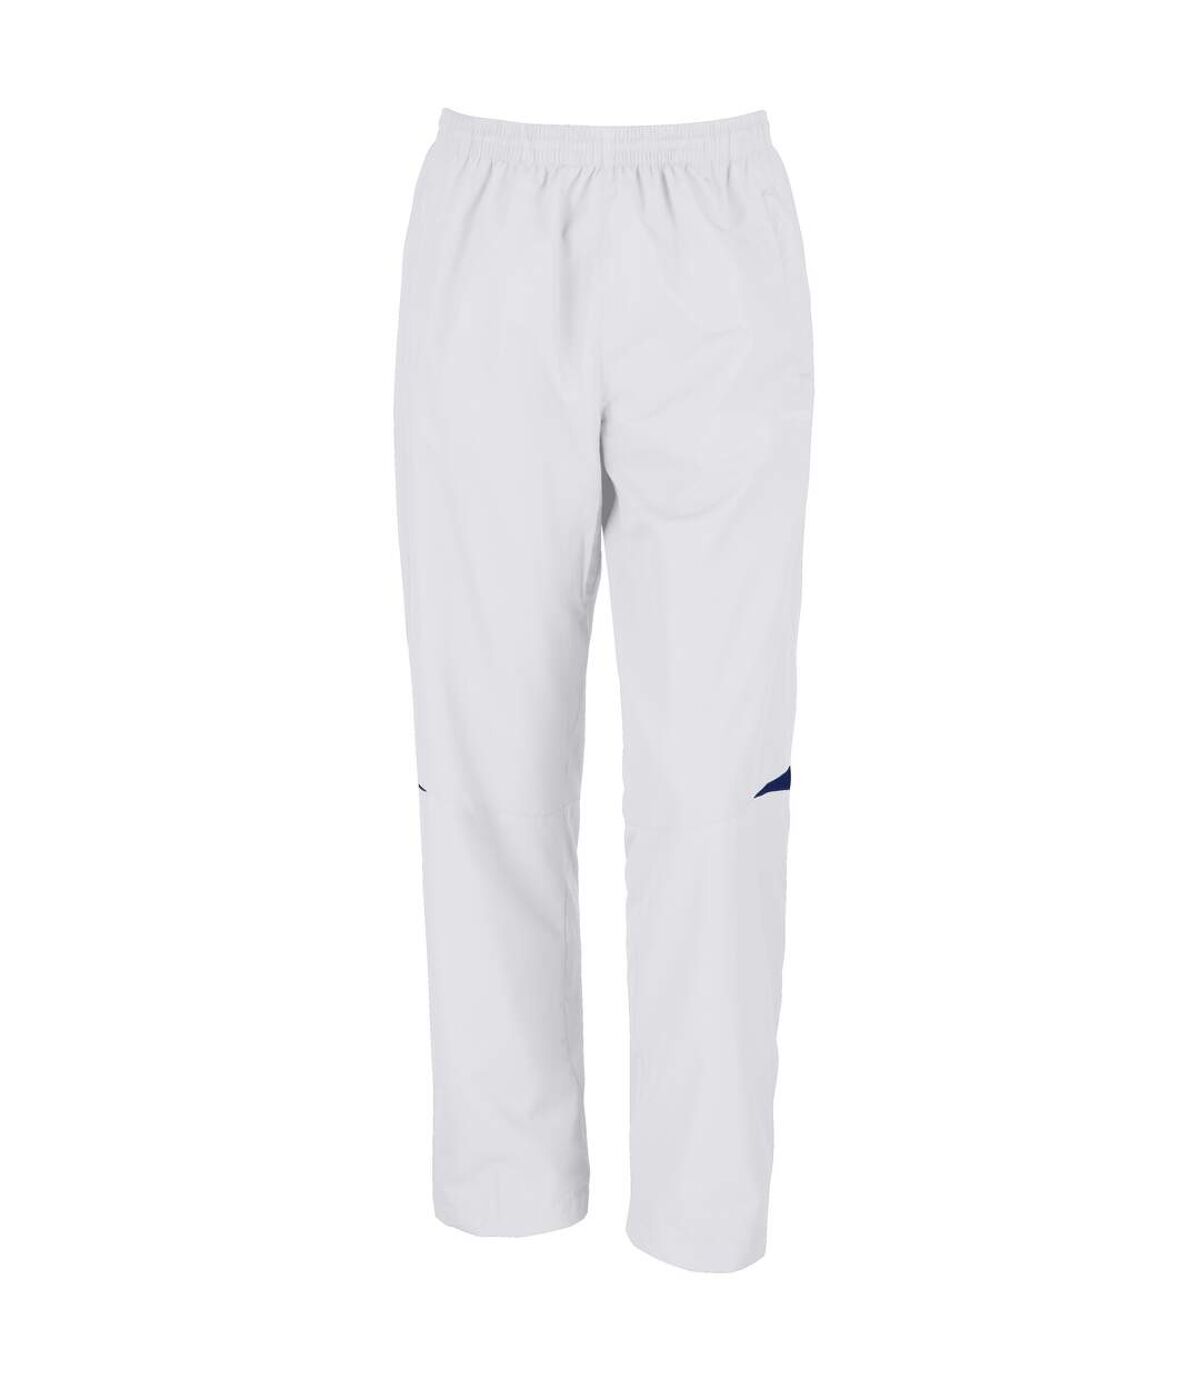 Spiro Mens Micro-Lite Performance Sports Pants / Tracksuit Bottoms (White/Navy)